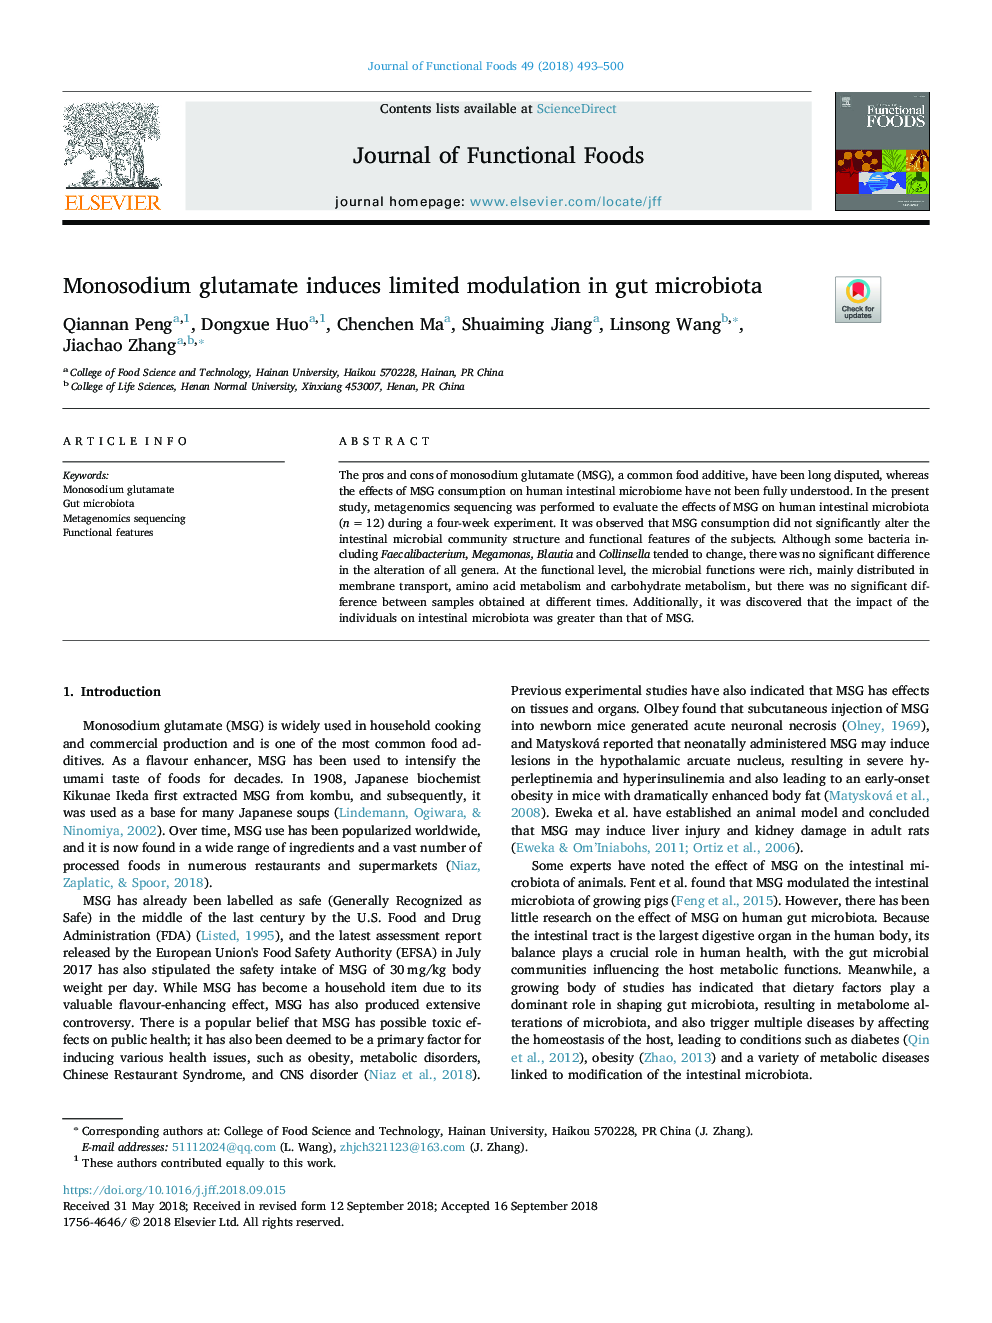 Monosodium glutamate induces limited modulation in gut microbiota